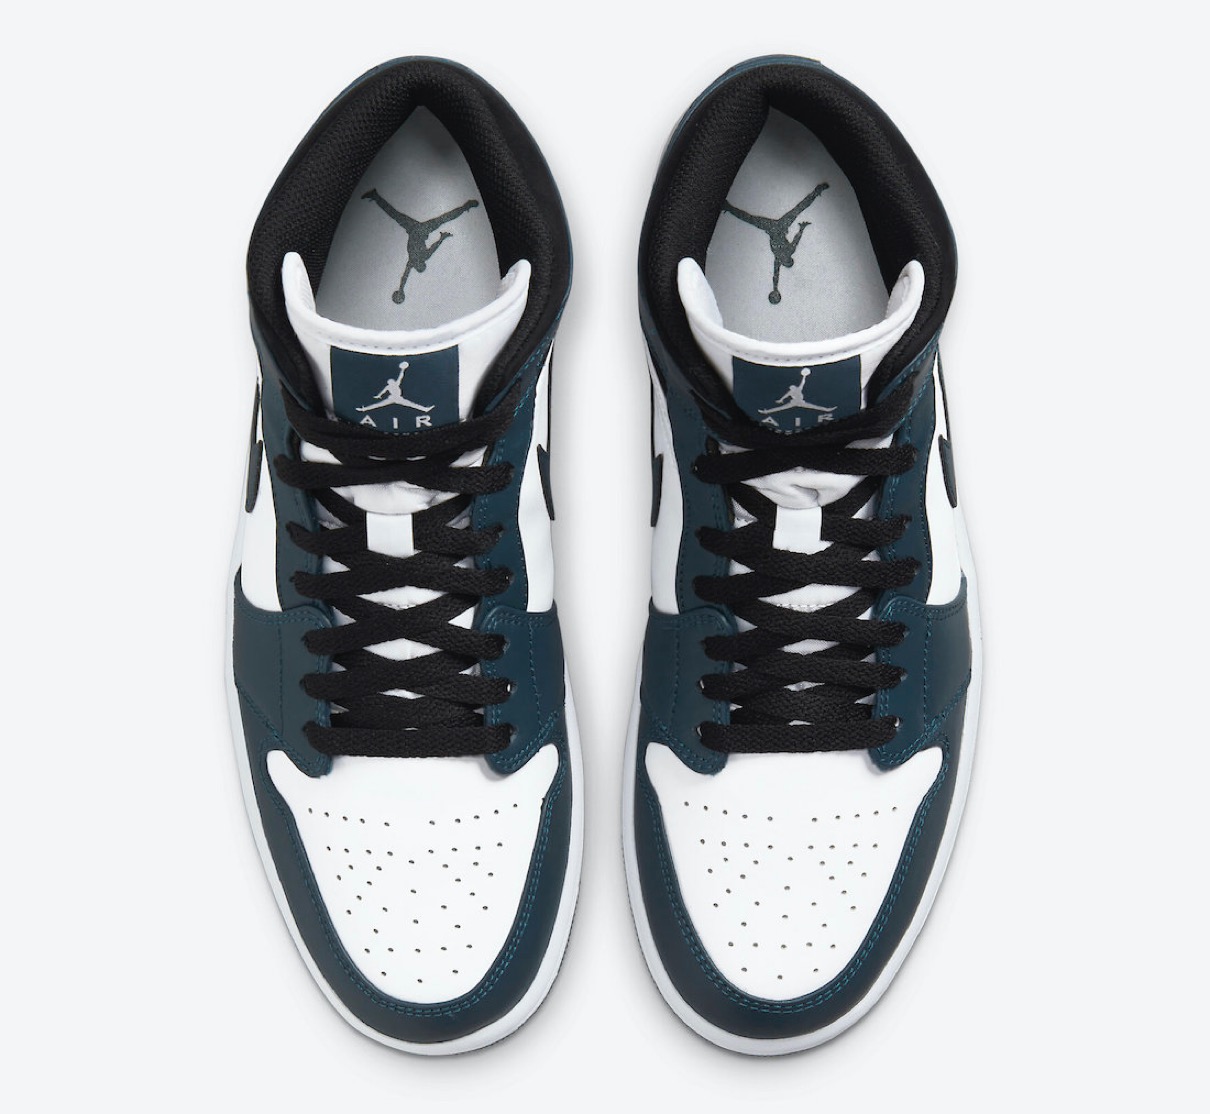 Nike】Air Jordan 1 Mid “Armory Navy”が国内4月27日より発売予定 | UP ...